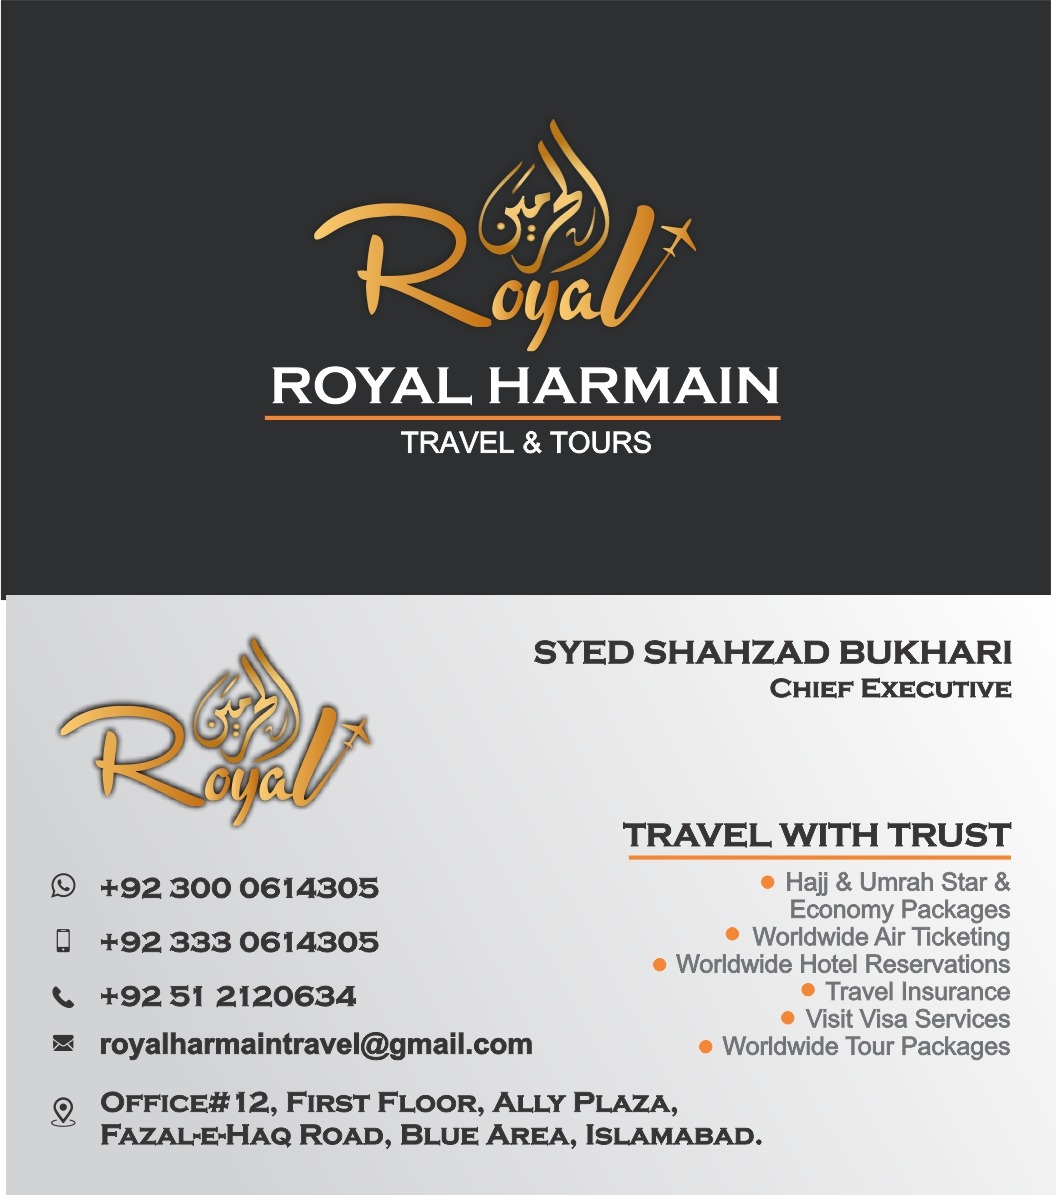 Royal Harmain Travel & Tours